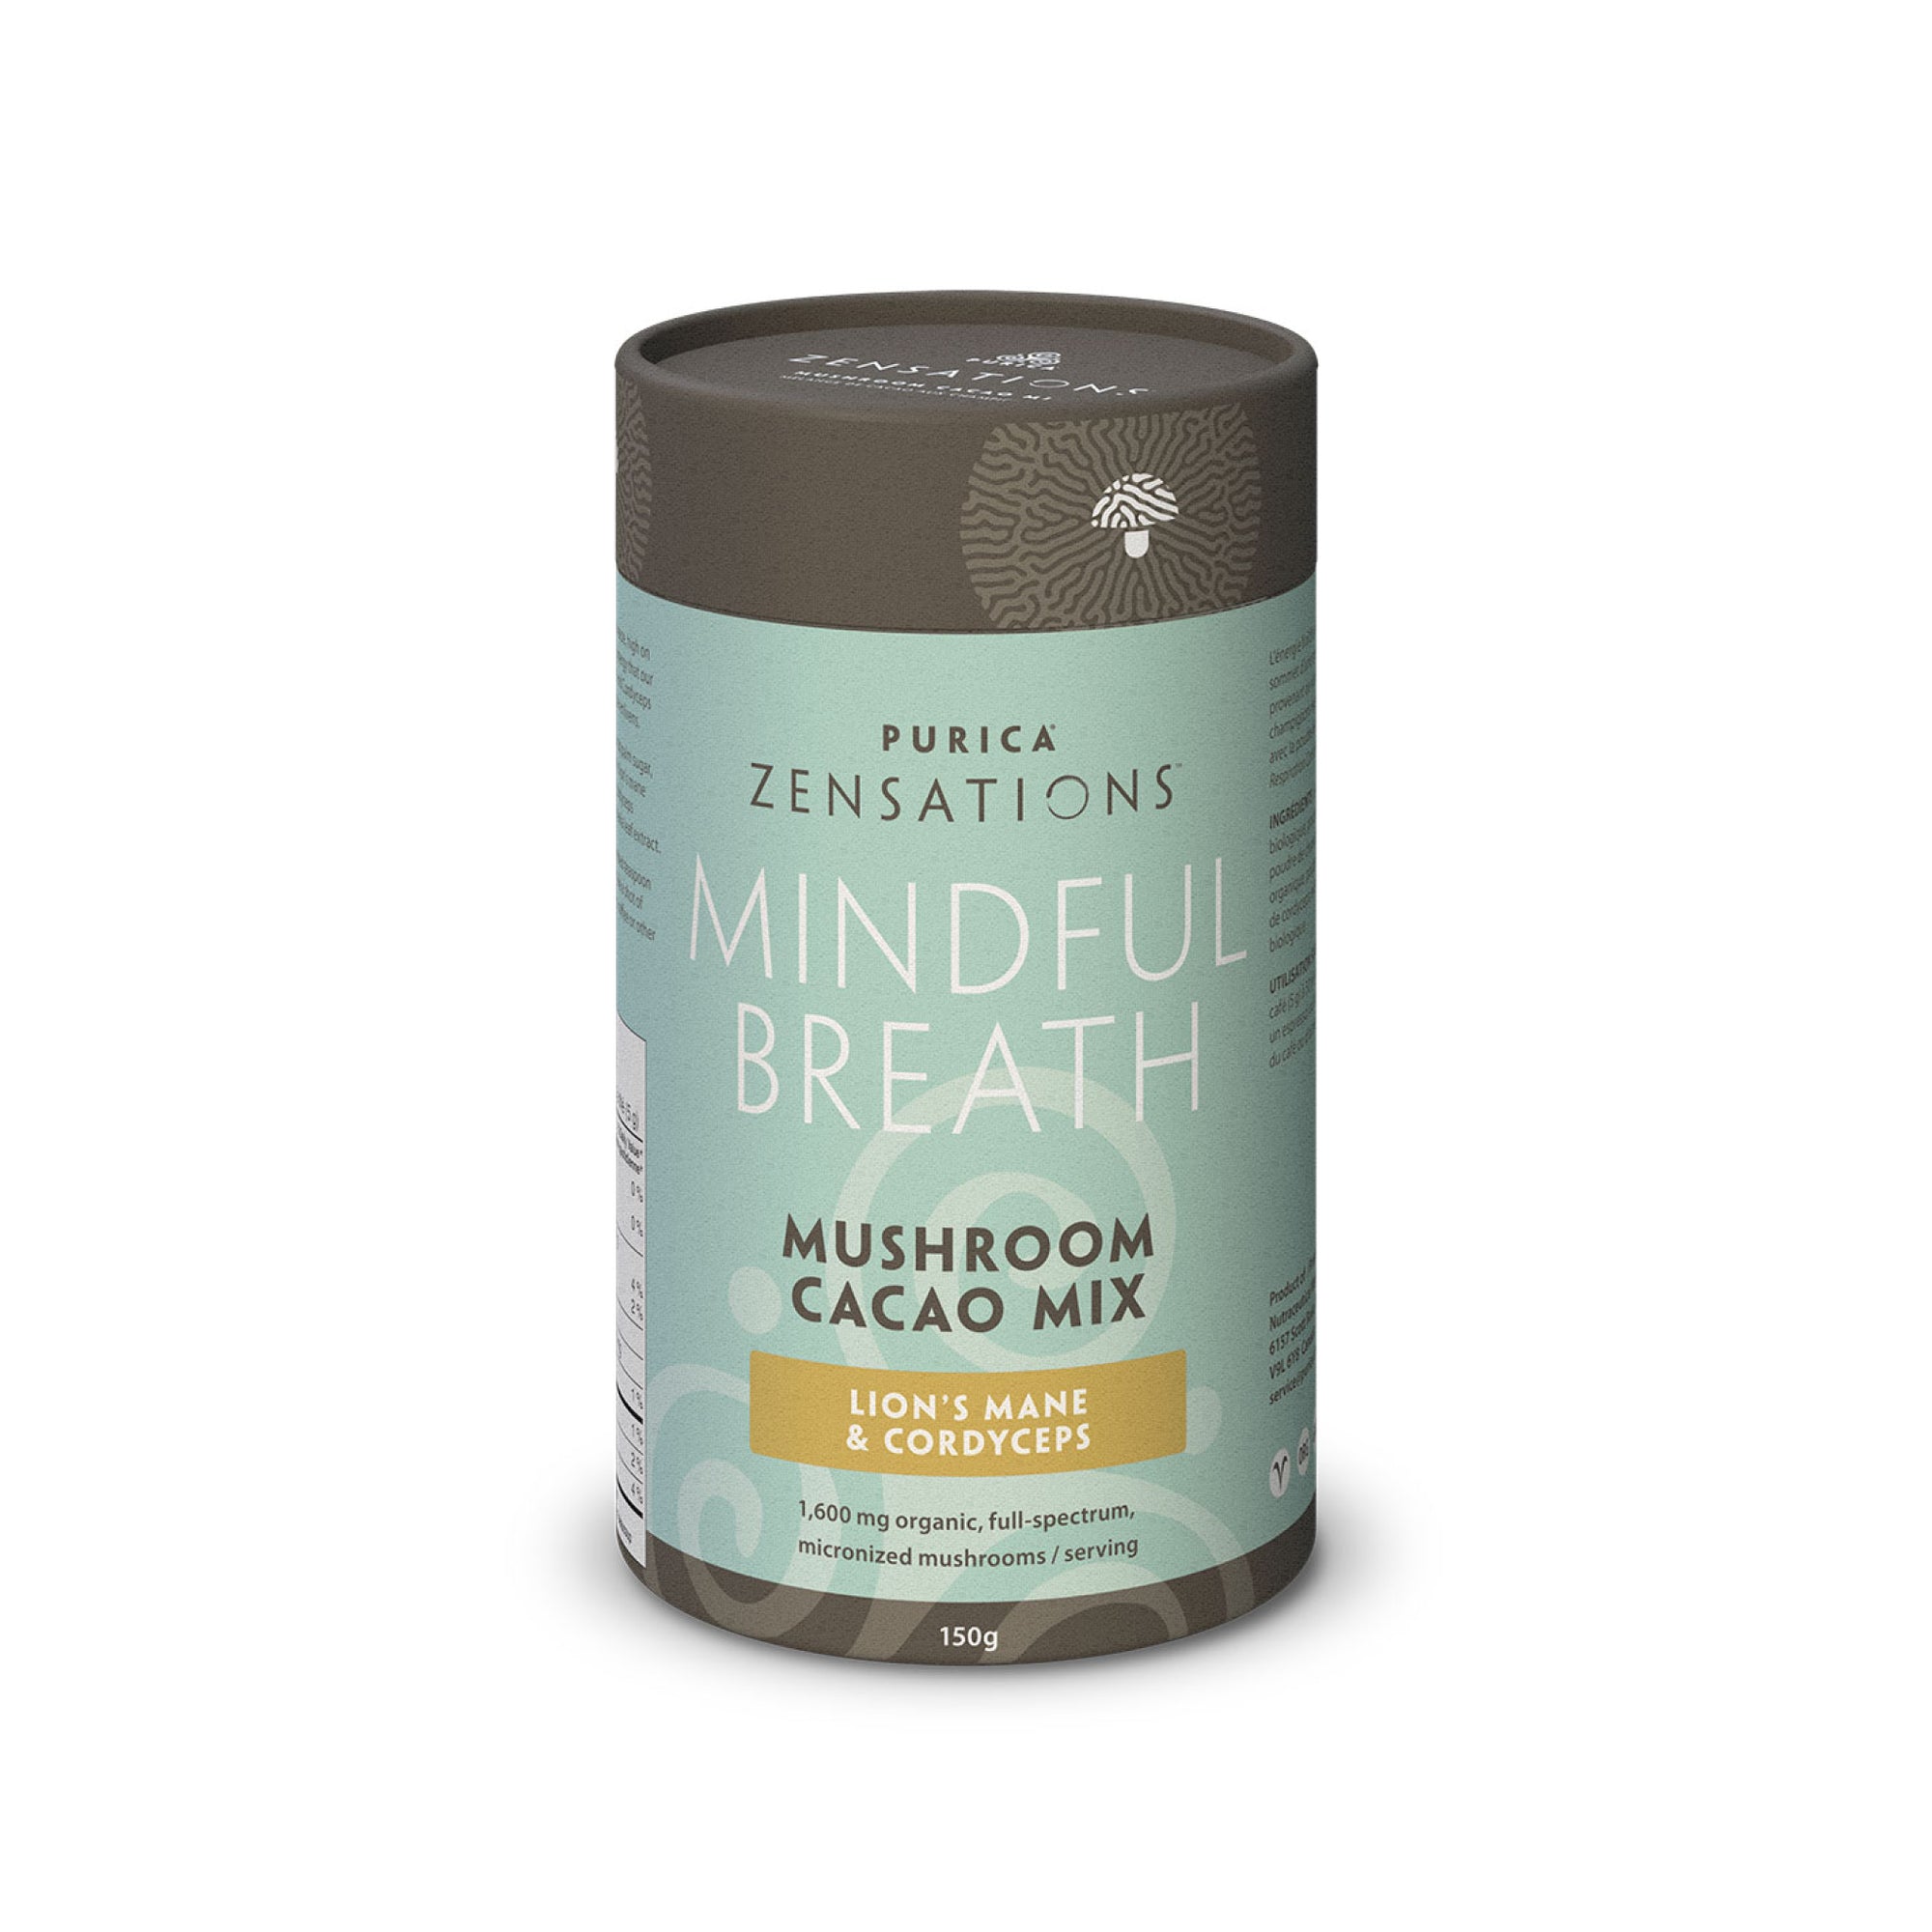 Purica Zensations Mindful Breath Mushroom Cacao Mix 150g